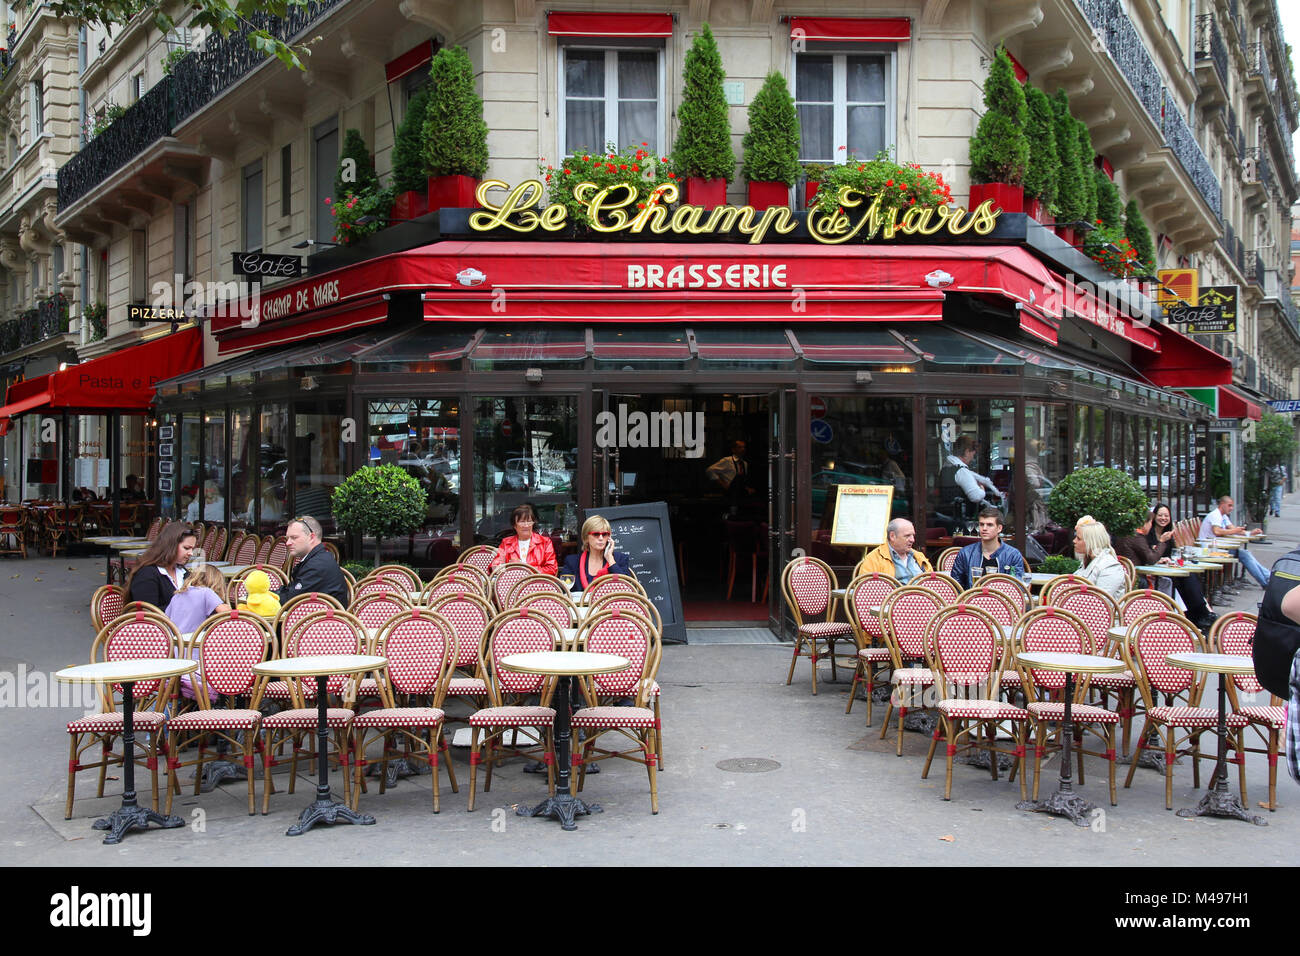 PARIS, FRANCE - JULY 21, 2011: Le Champ de Mars cafe in Paris, France. Le Champ de Mars cafe is a typical establishment for Paris, one of largest metr Stock Photo